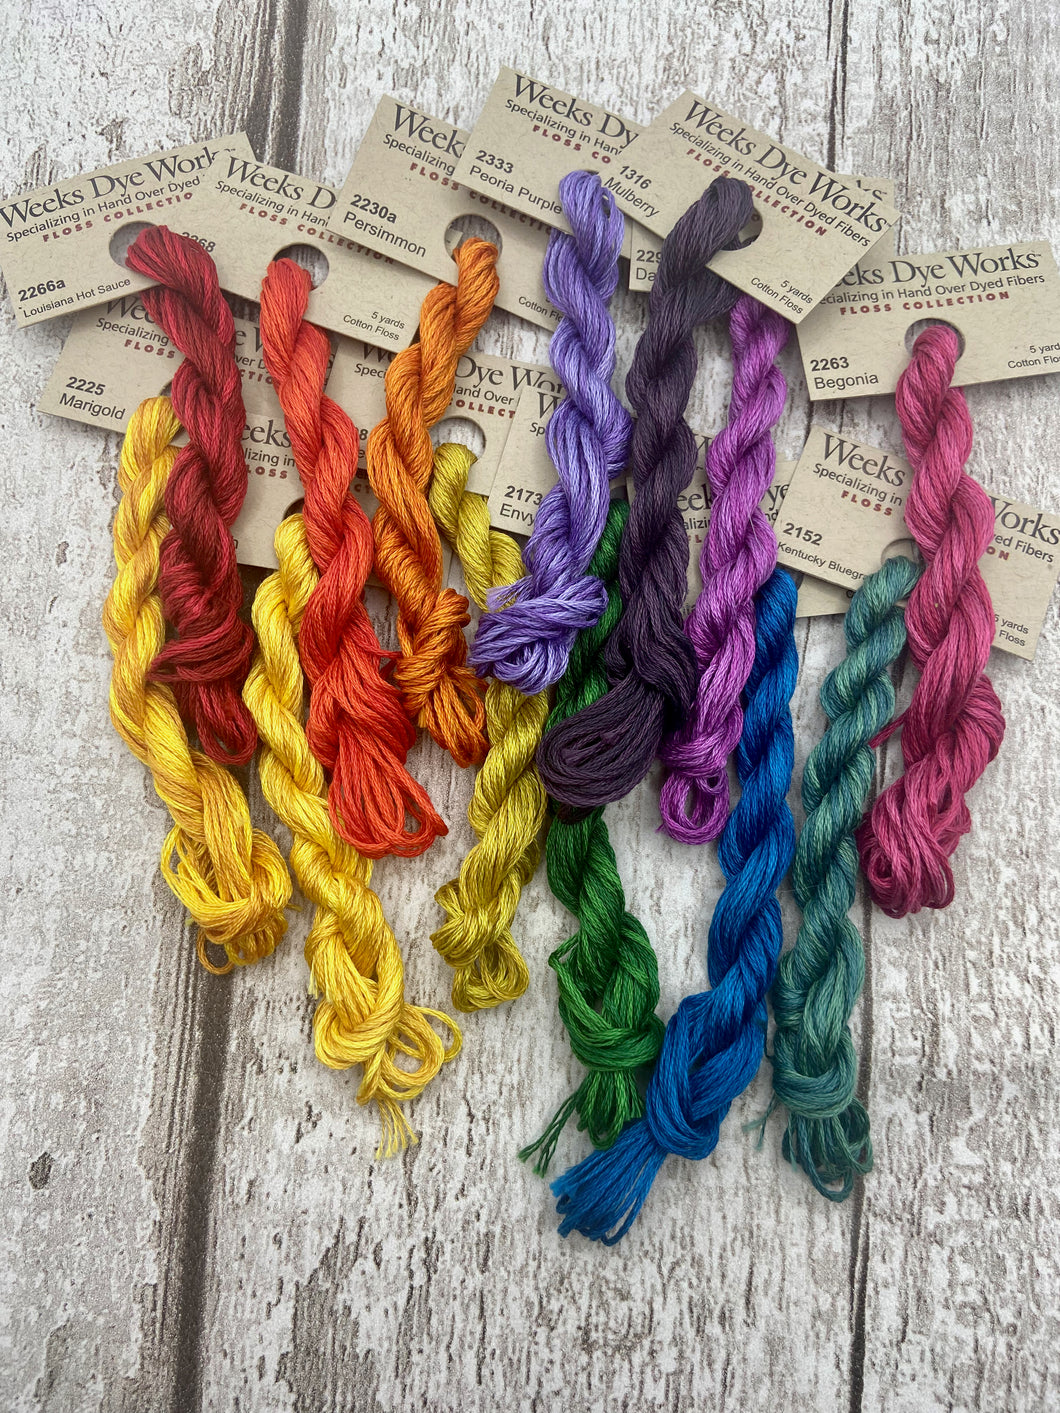 The Ultimate Rainbow Set of Weeks Dye Works 6-strand Floss